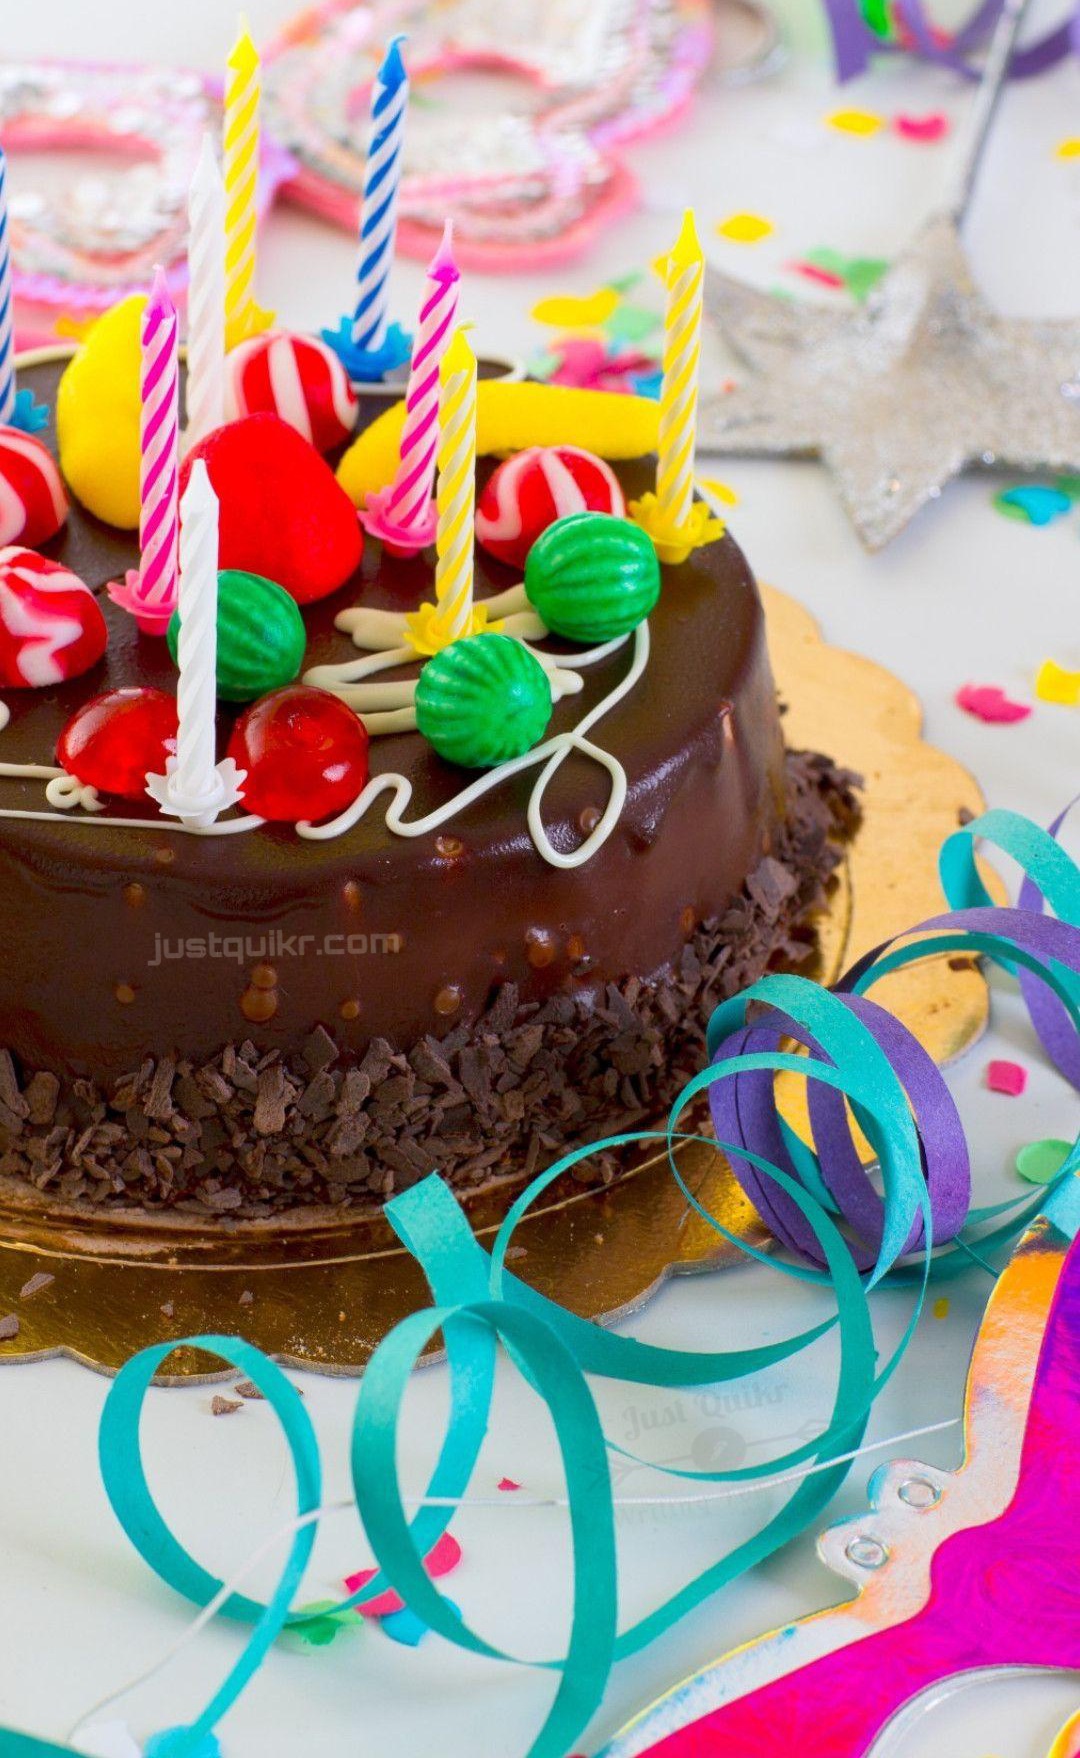 Creative Happy Birthday Wishing Cake Status Images for Team Members